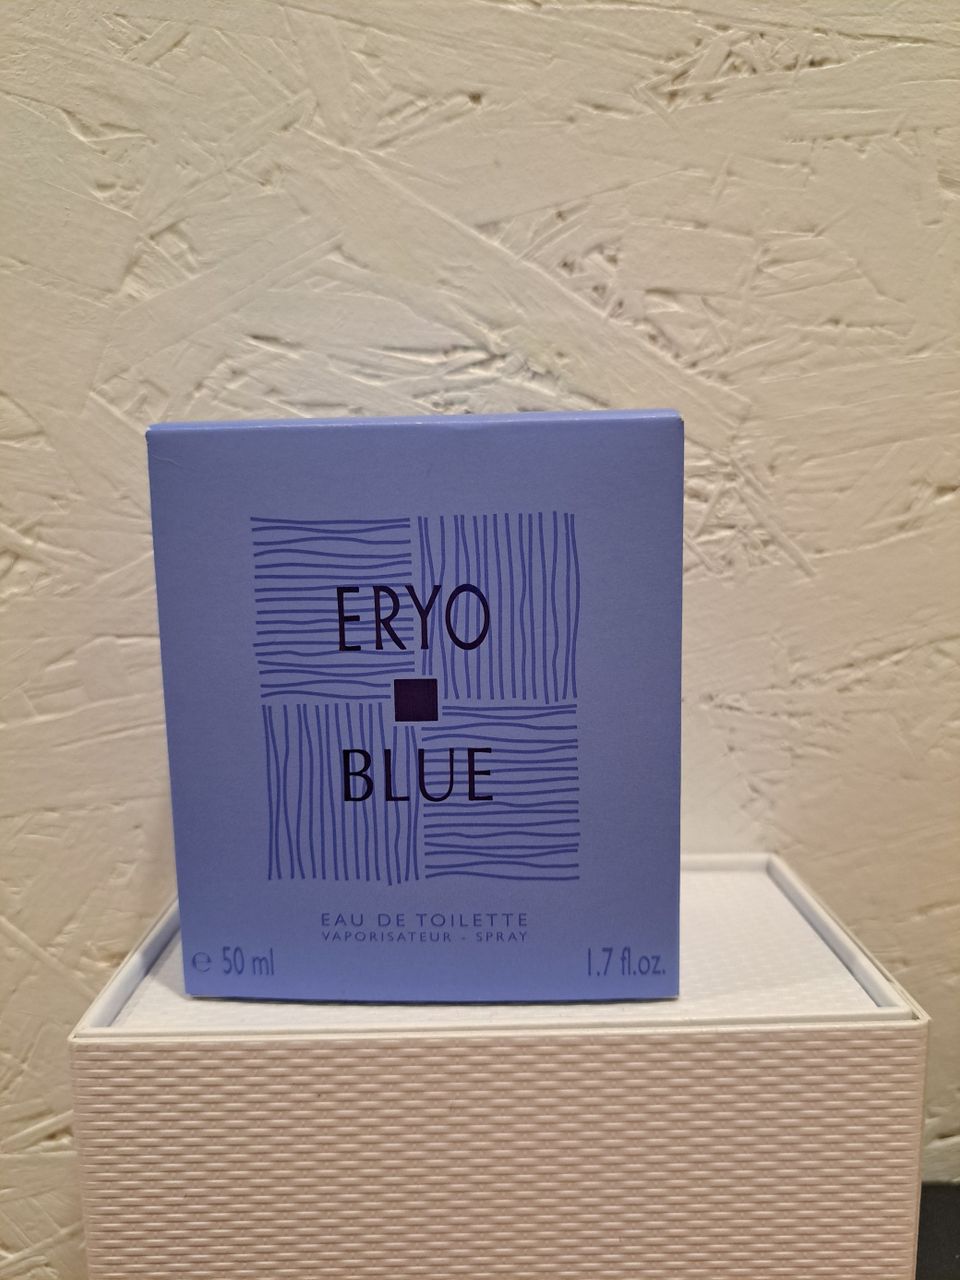 Yves Rocher Eryo Blue miesten hajuvesi